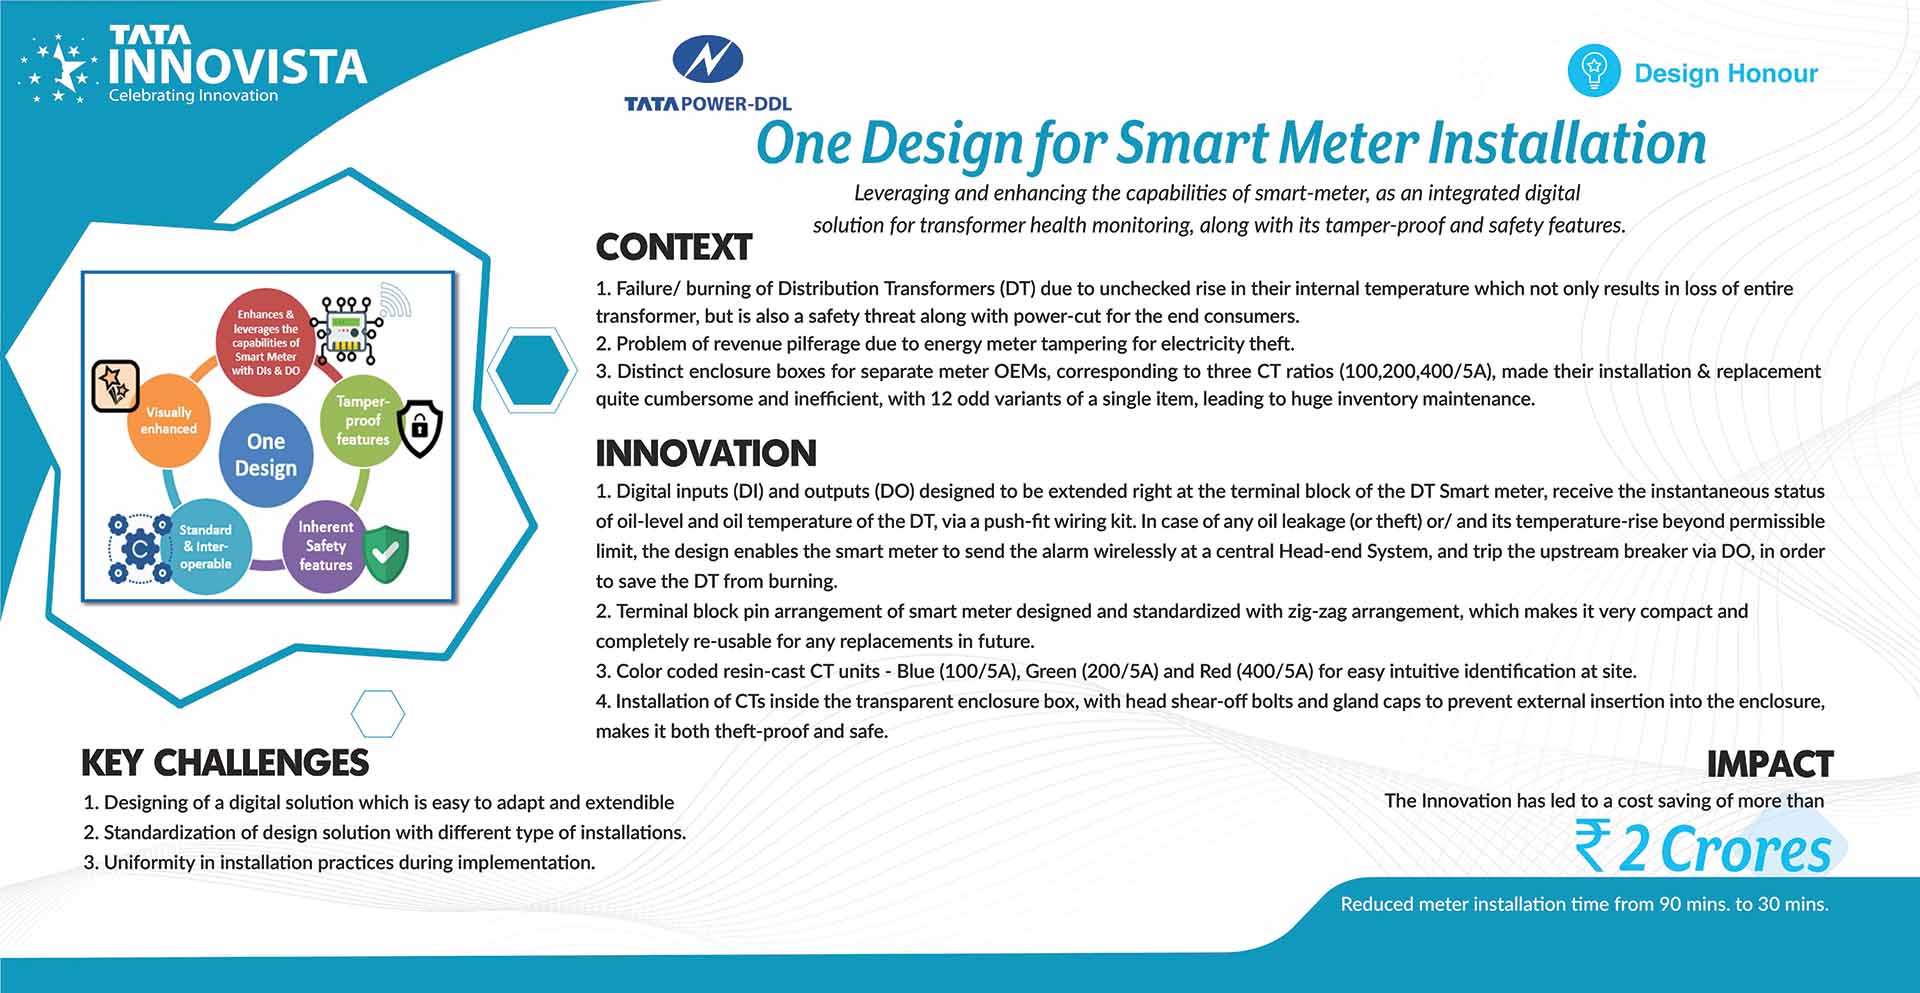 One Design for Smart Meter Installation